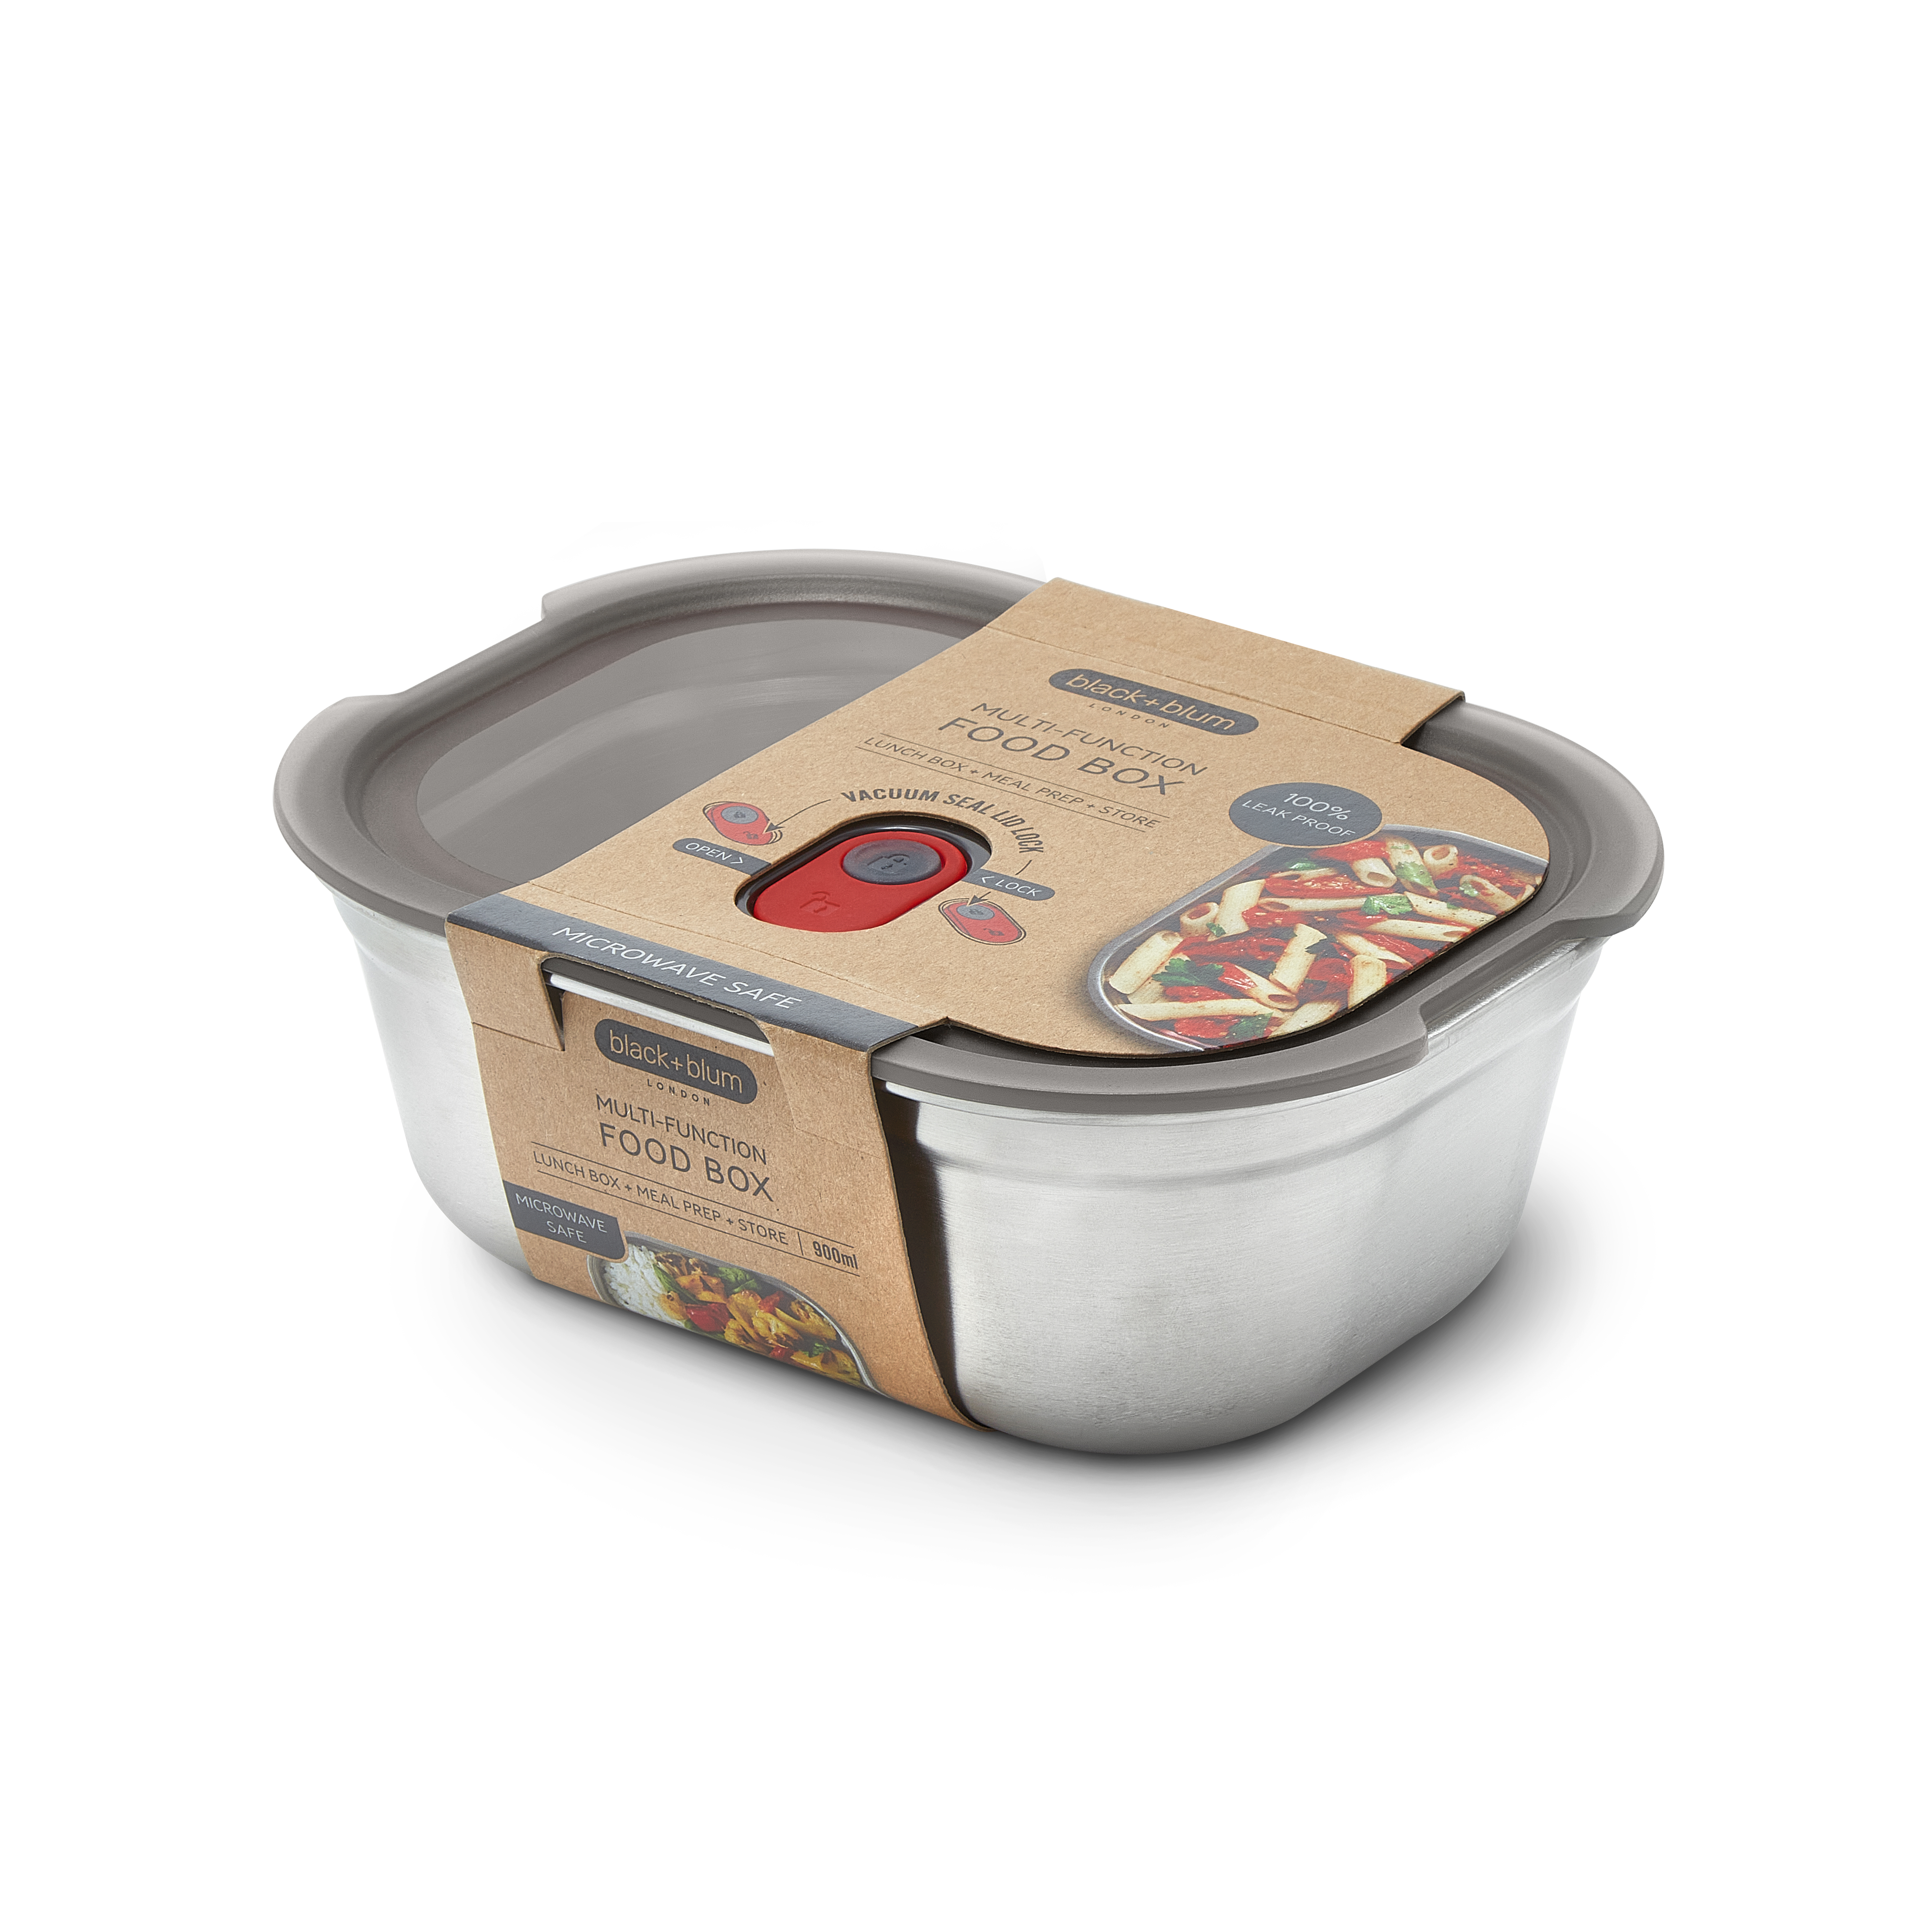 STEEL FOOD BOX Medium - Lunchbox multifunktional (EN)